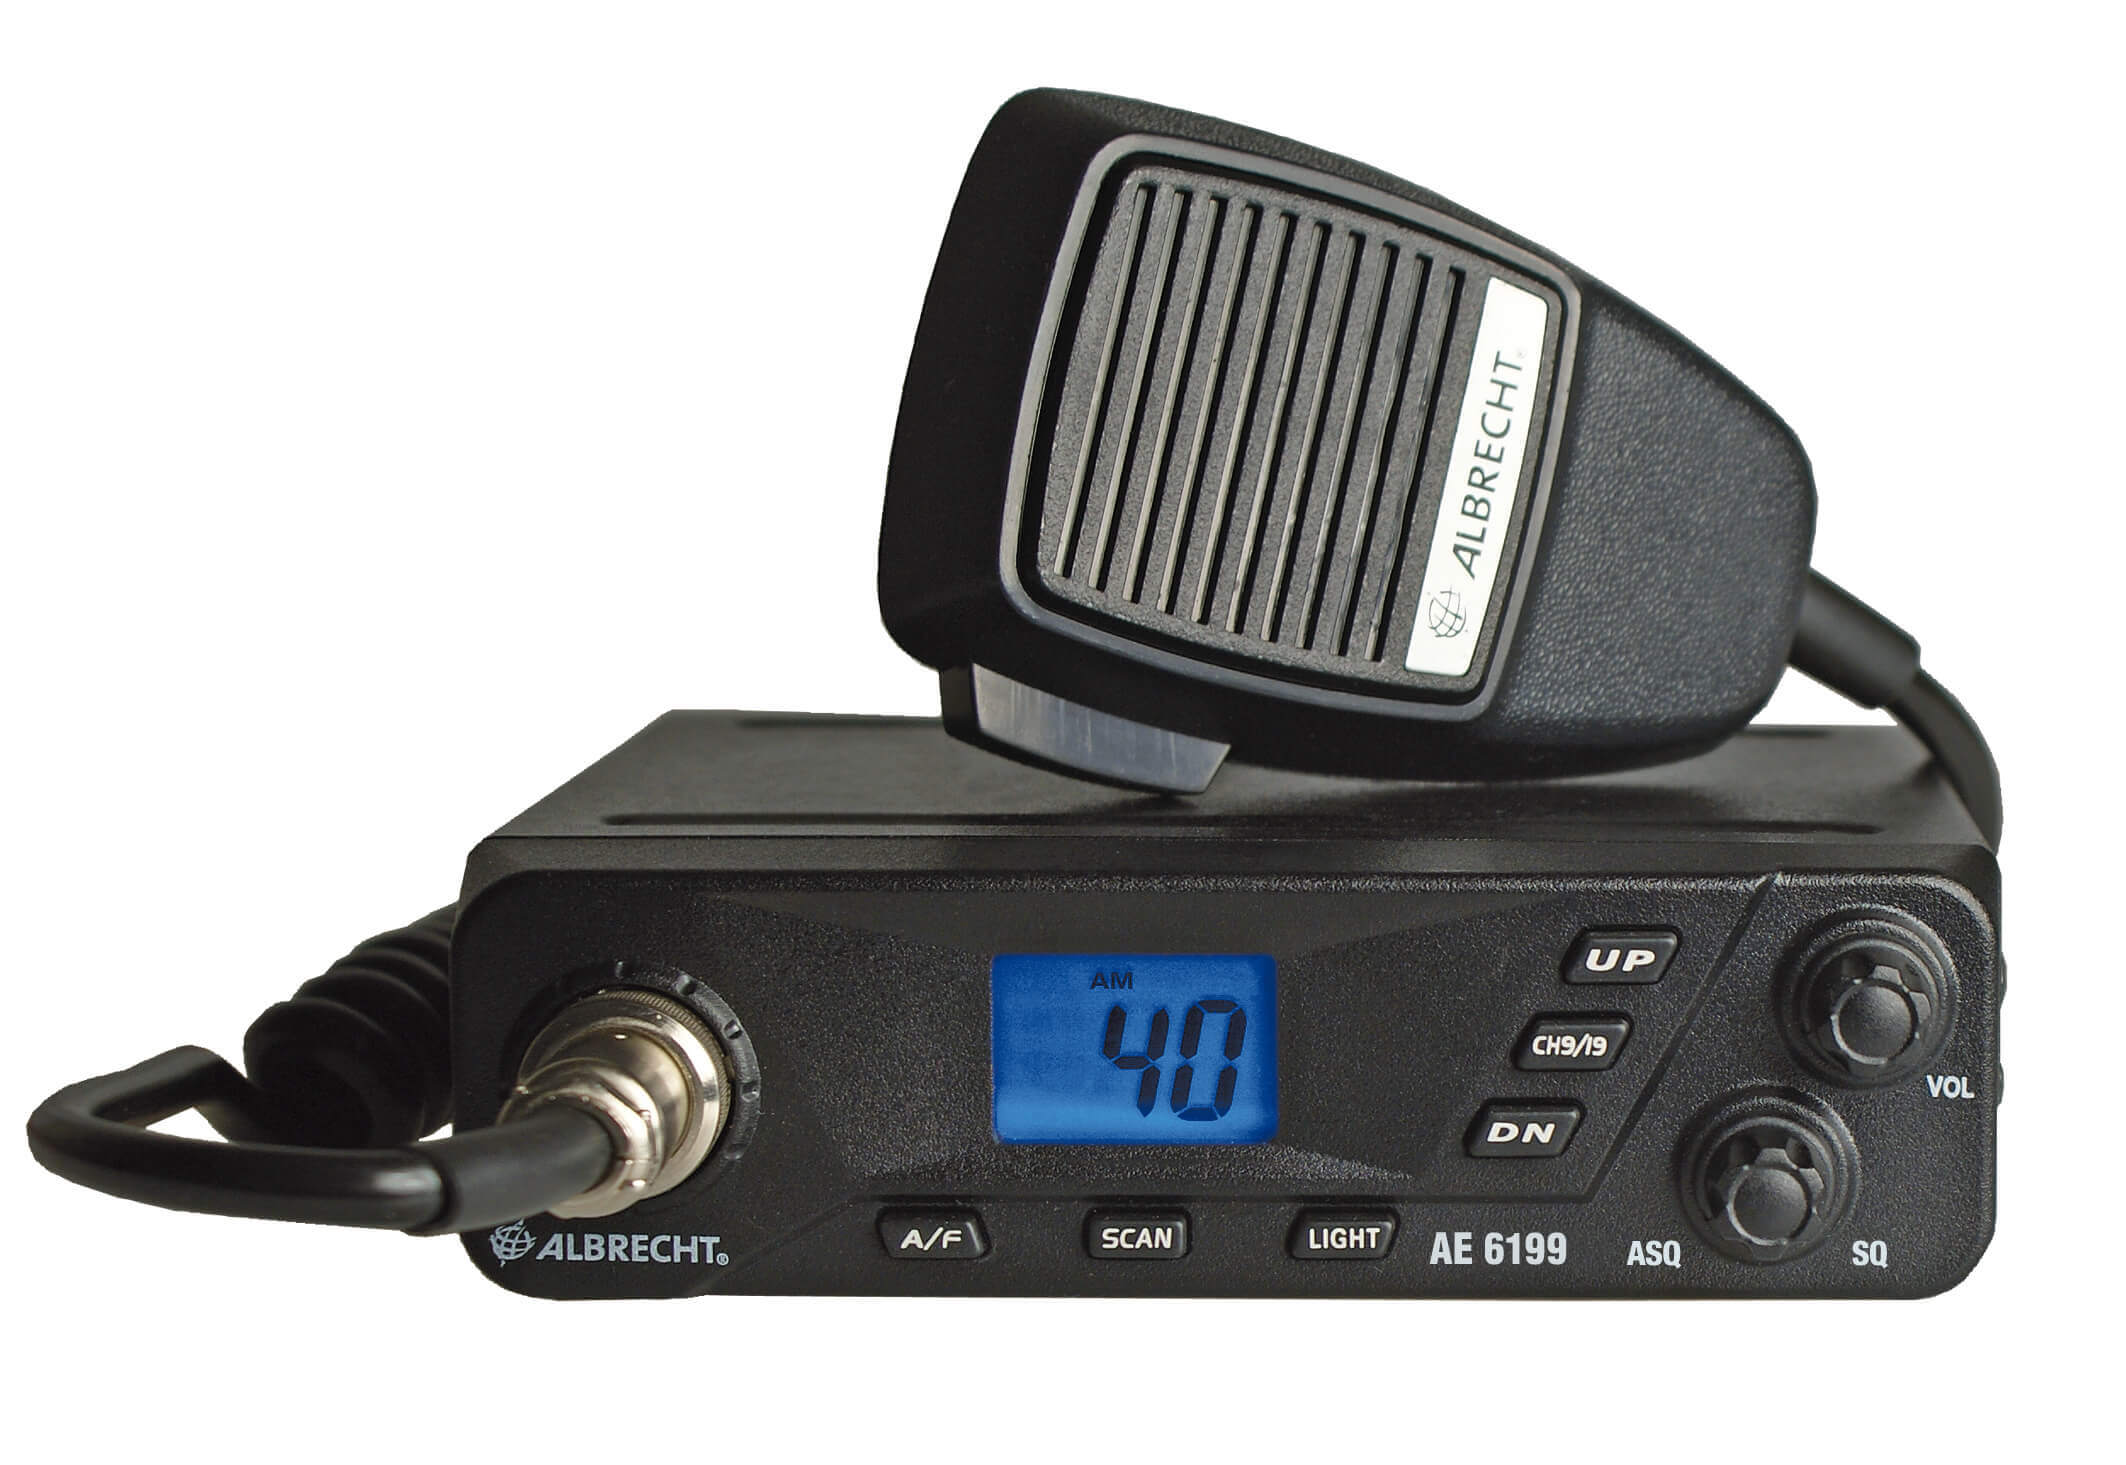 Stații radio CB și PMR - Stație radio CB Albrecht AE 6199, 12V, ASQ, 4W, AM/FM, Scan, LCD multifuncțional, fomcoshop.ro